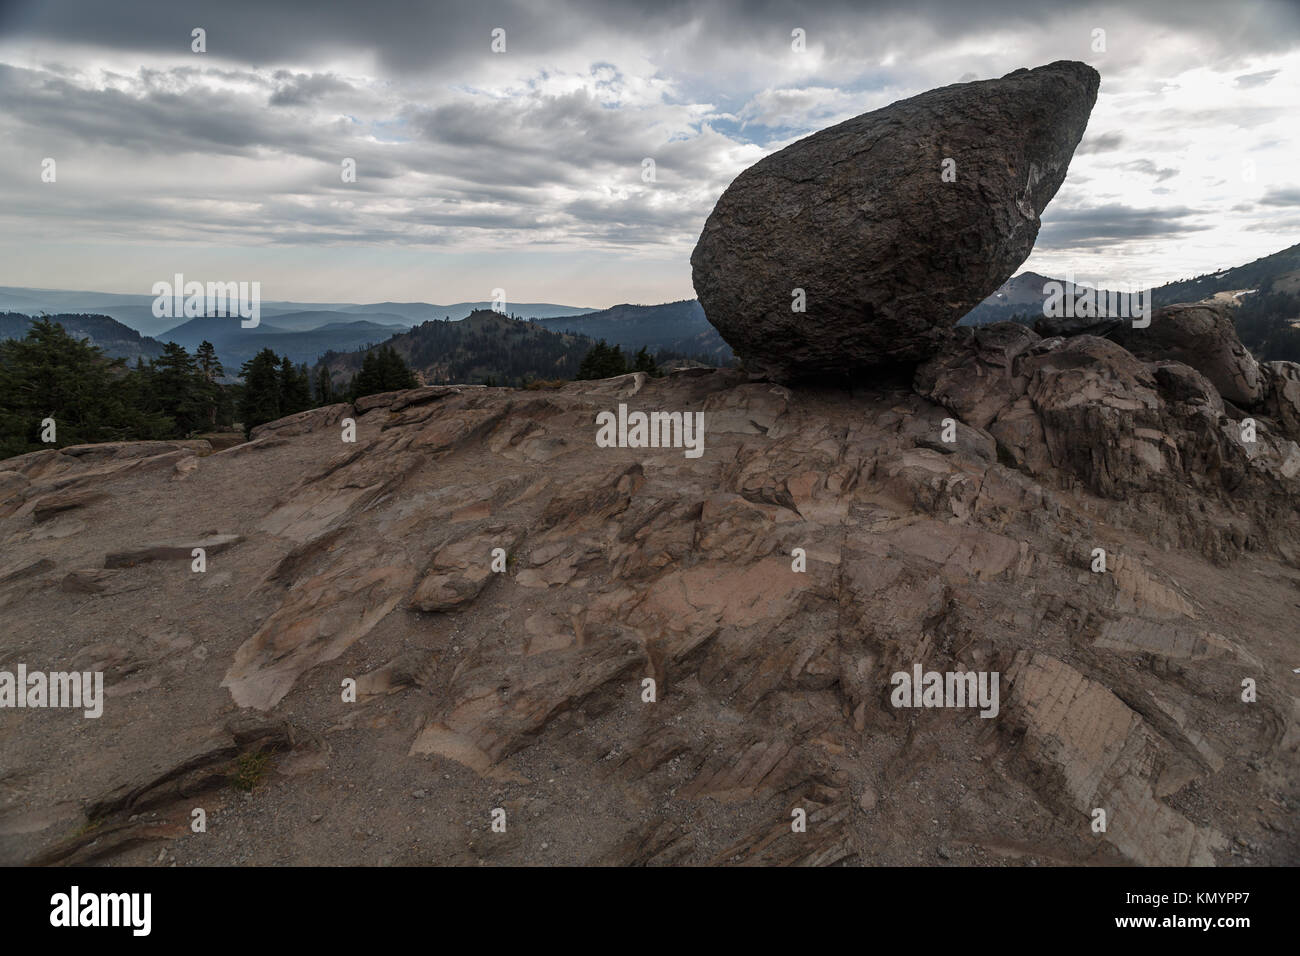 Large boulder balances on the cliff edge in volcano ravaged Lassen Volcanic National Park Stock Photo